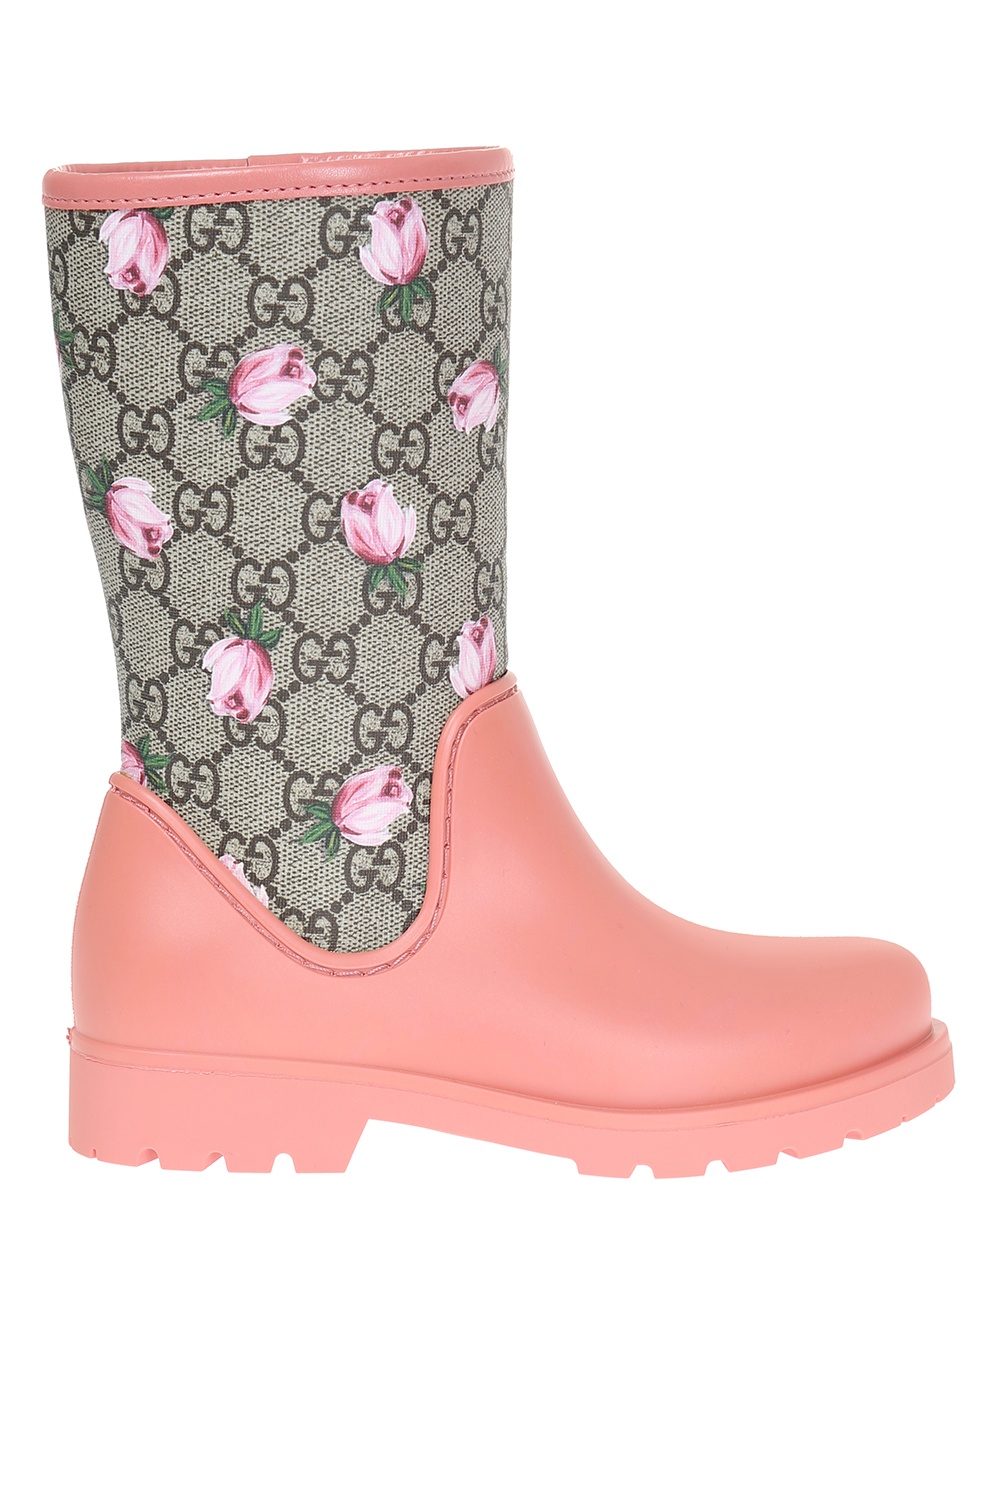 pink gucci rain boots